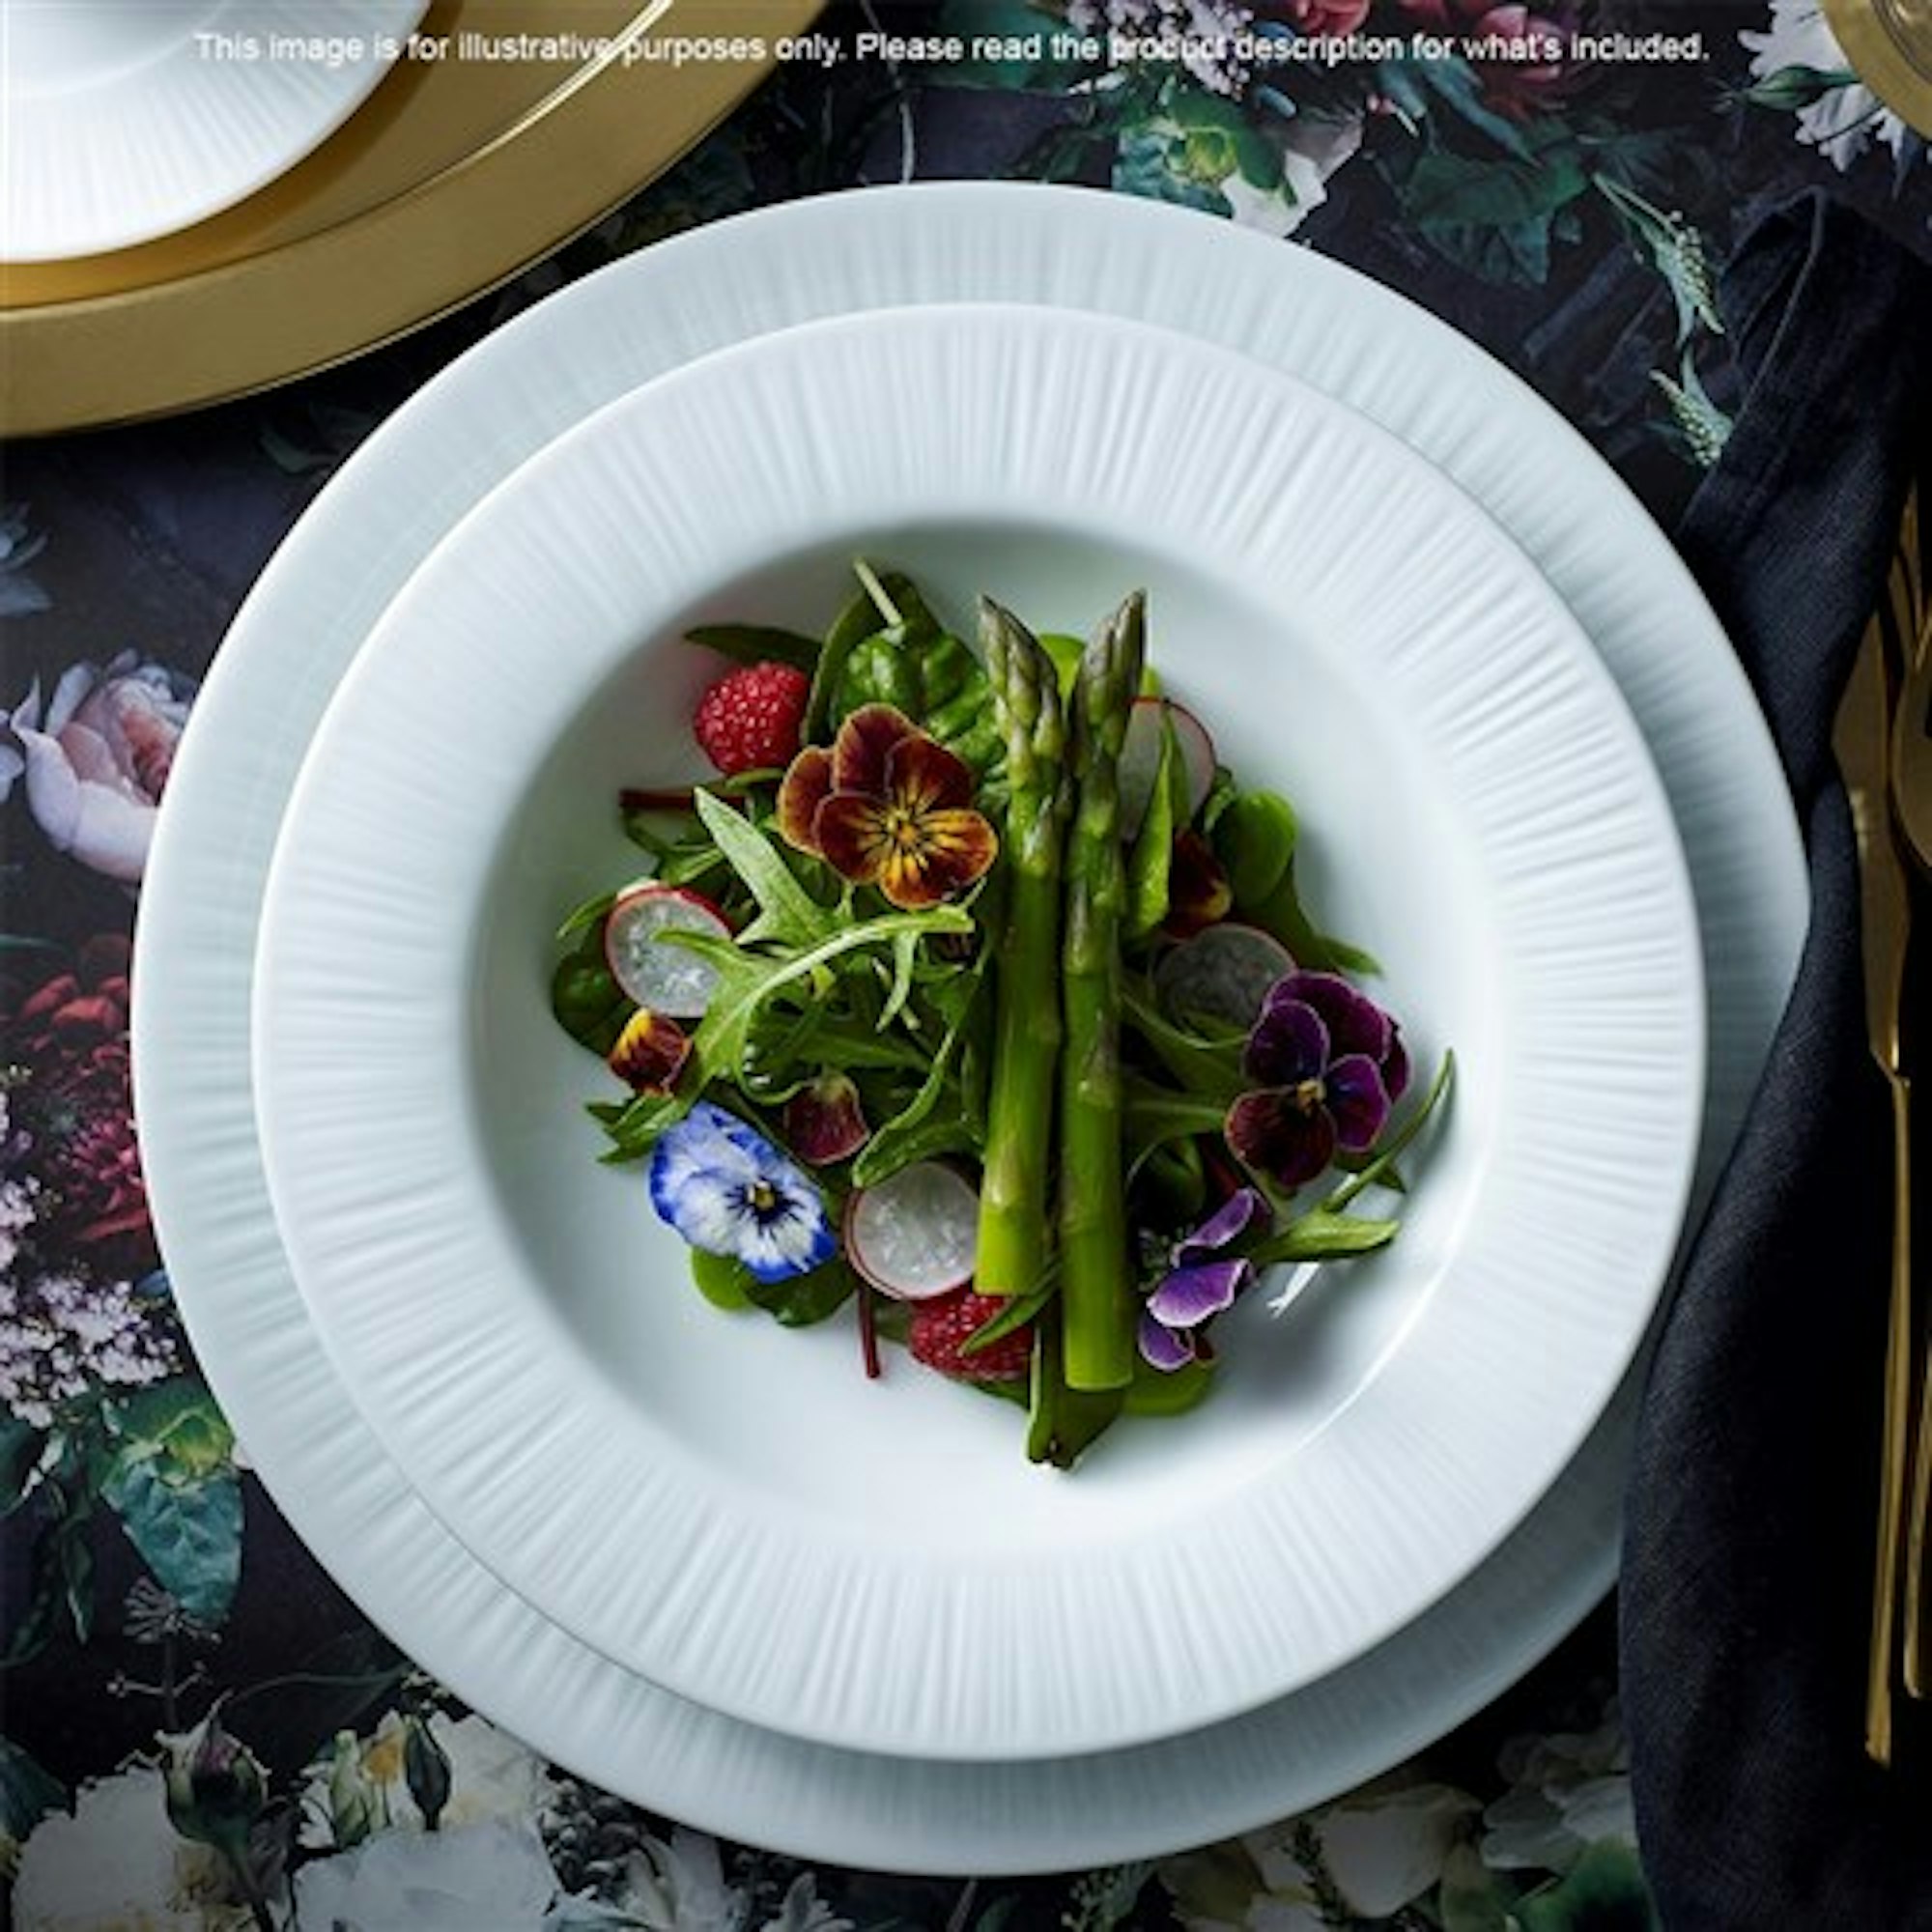 white dinner set serving spring salad with dark floral tablecloth